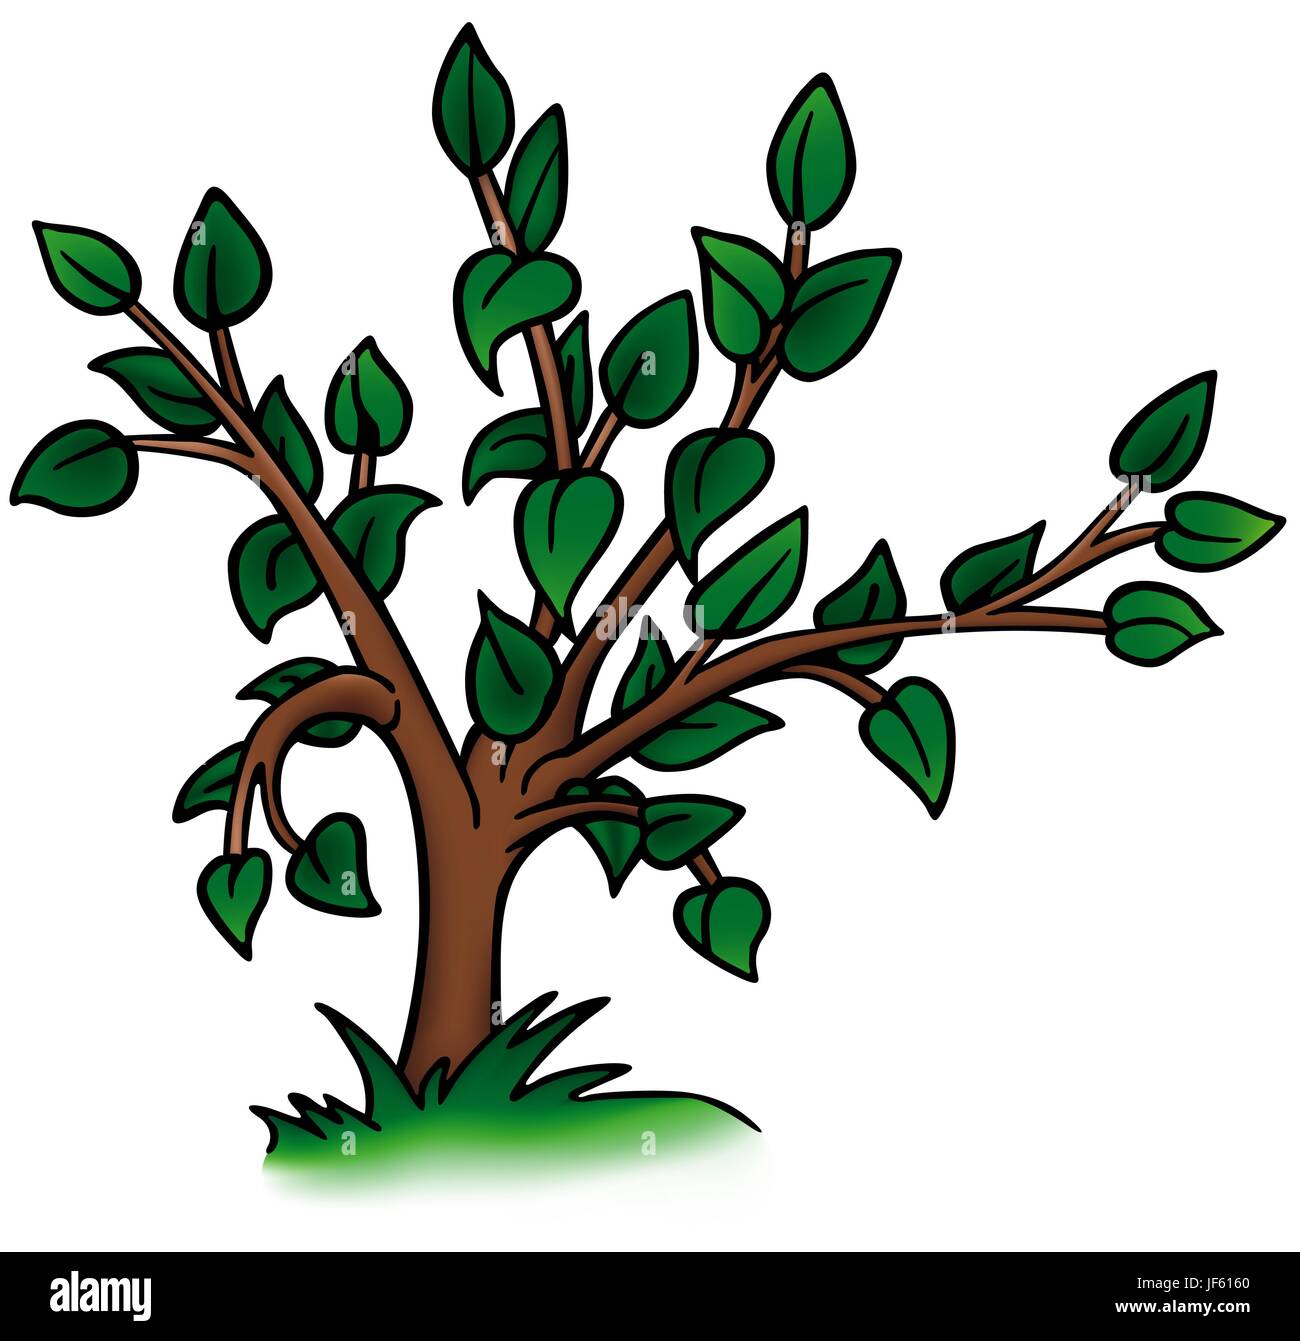 Blatt Comic Baum Stamm Flora Botanik Illustration Zweig Humorvoll Stock Vektorgrafik Alamy